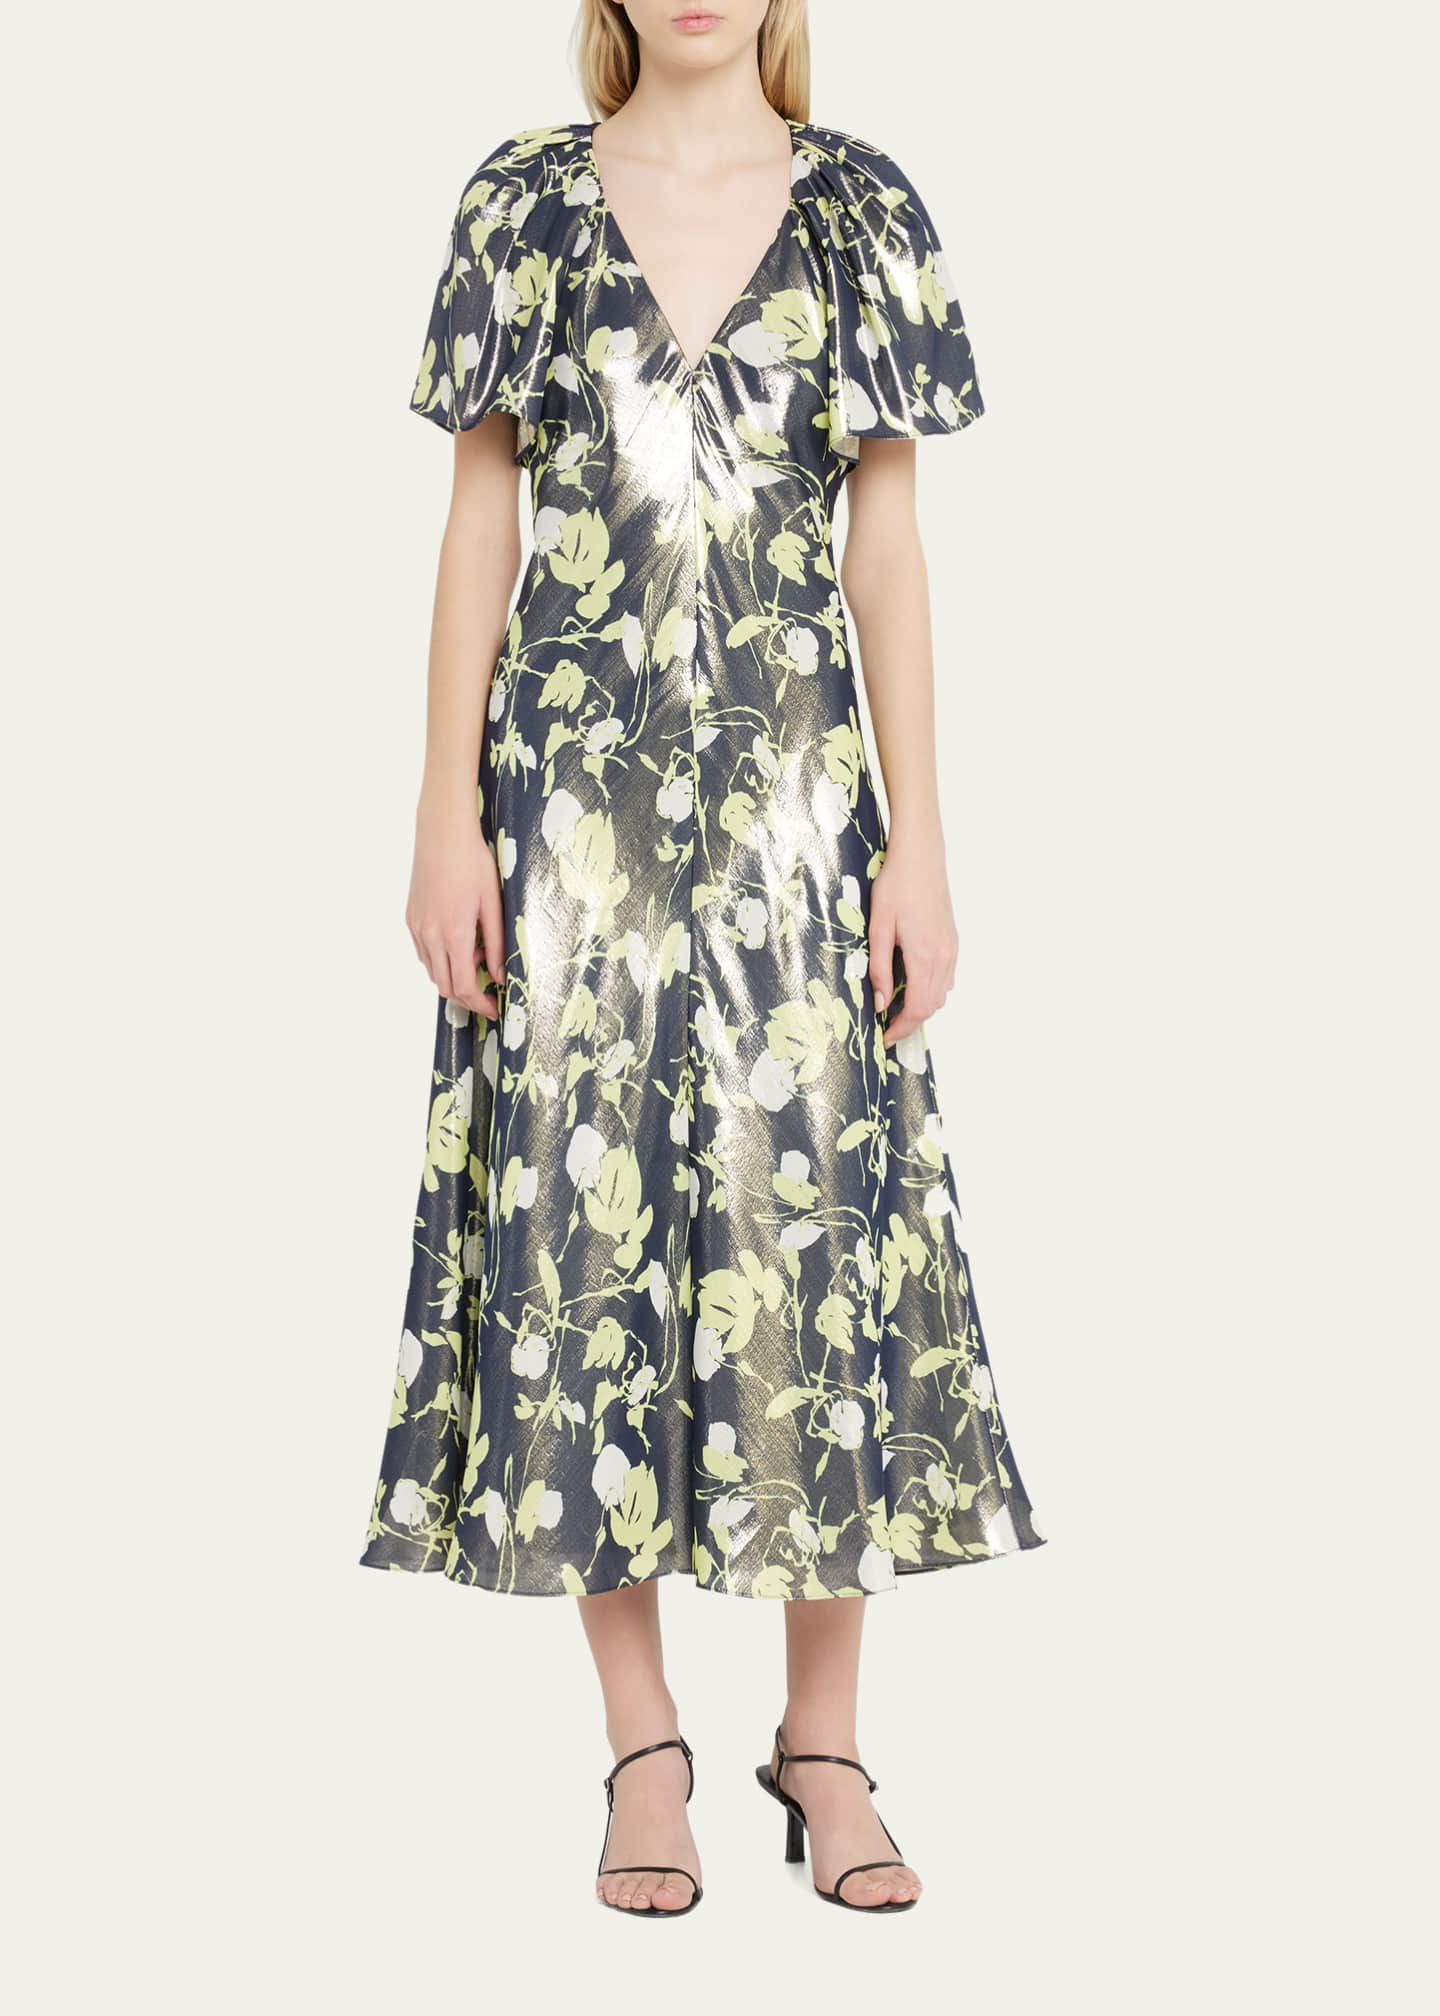 Tanya Taylor Evette Lurex Floral Metallic Midi Dress - Bergdorf Goodman